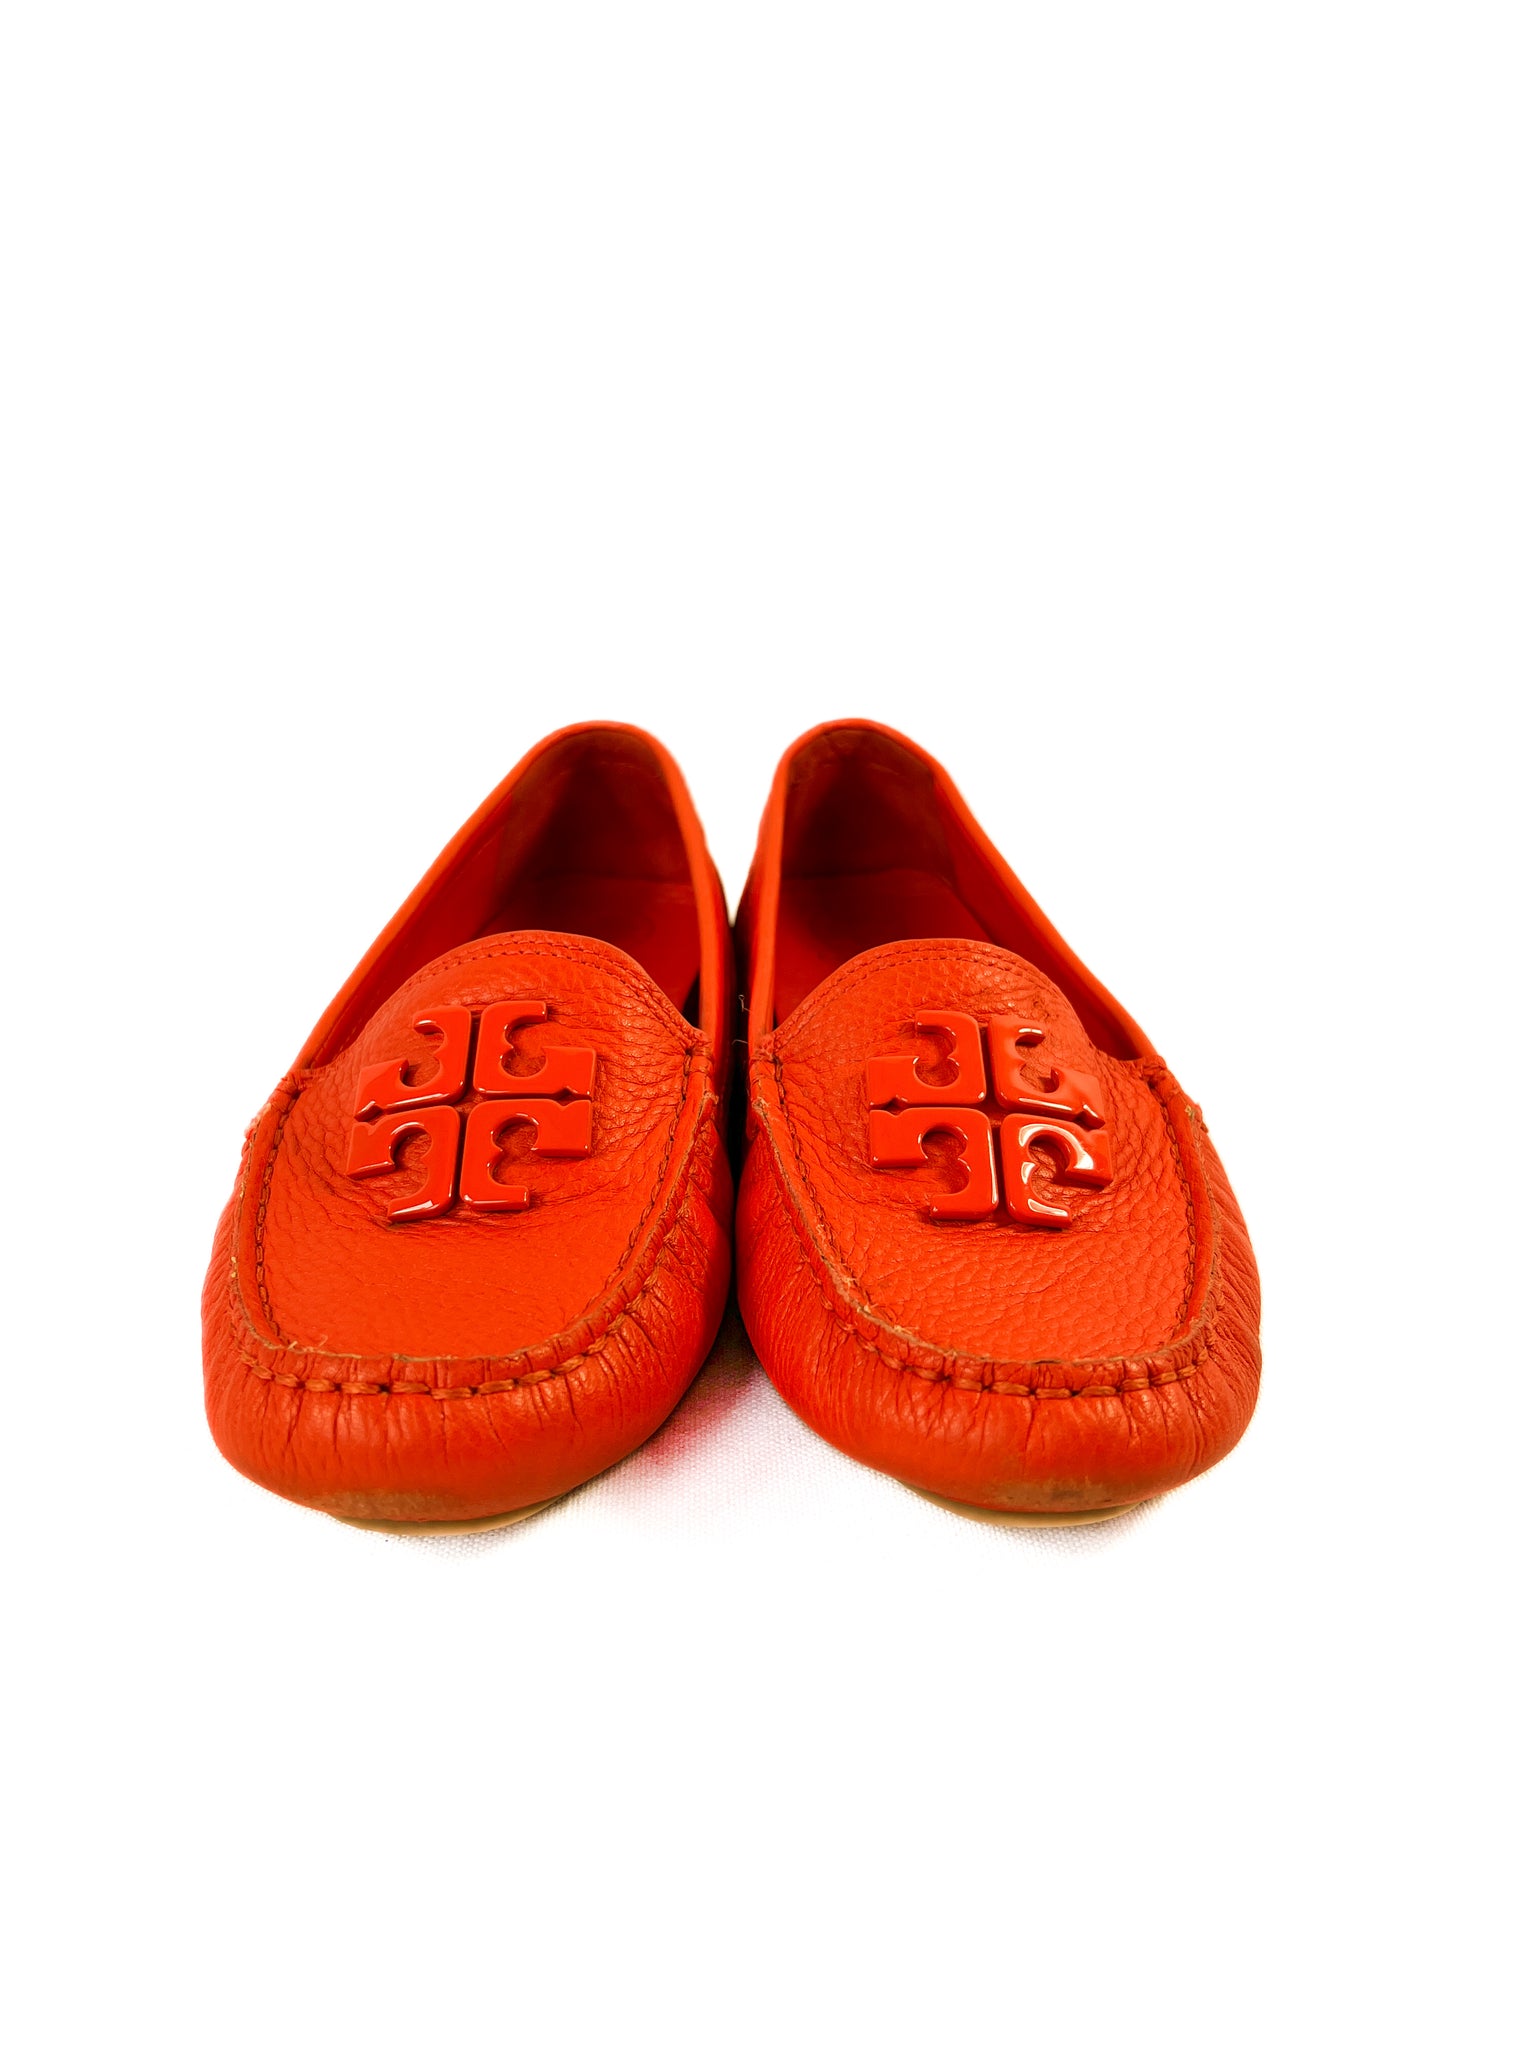 Tory Burch orange leather loafers size 7 – My Girlfriend's Wardrobe LLC